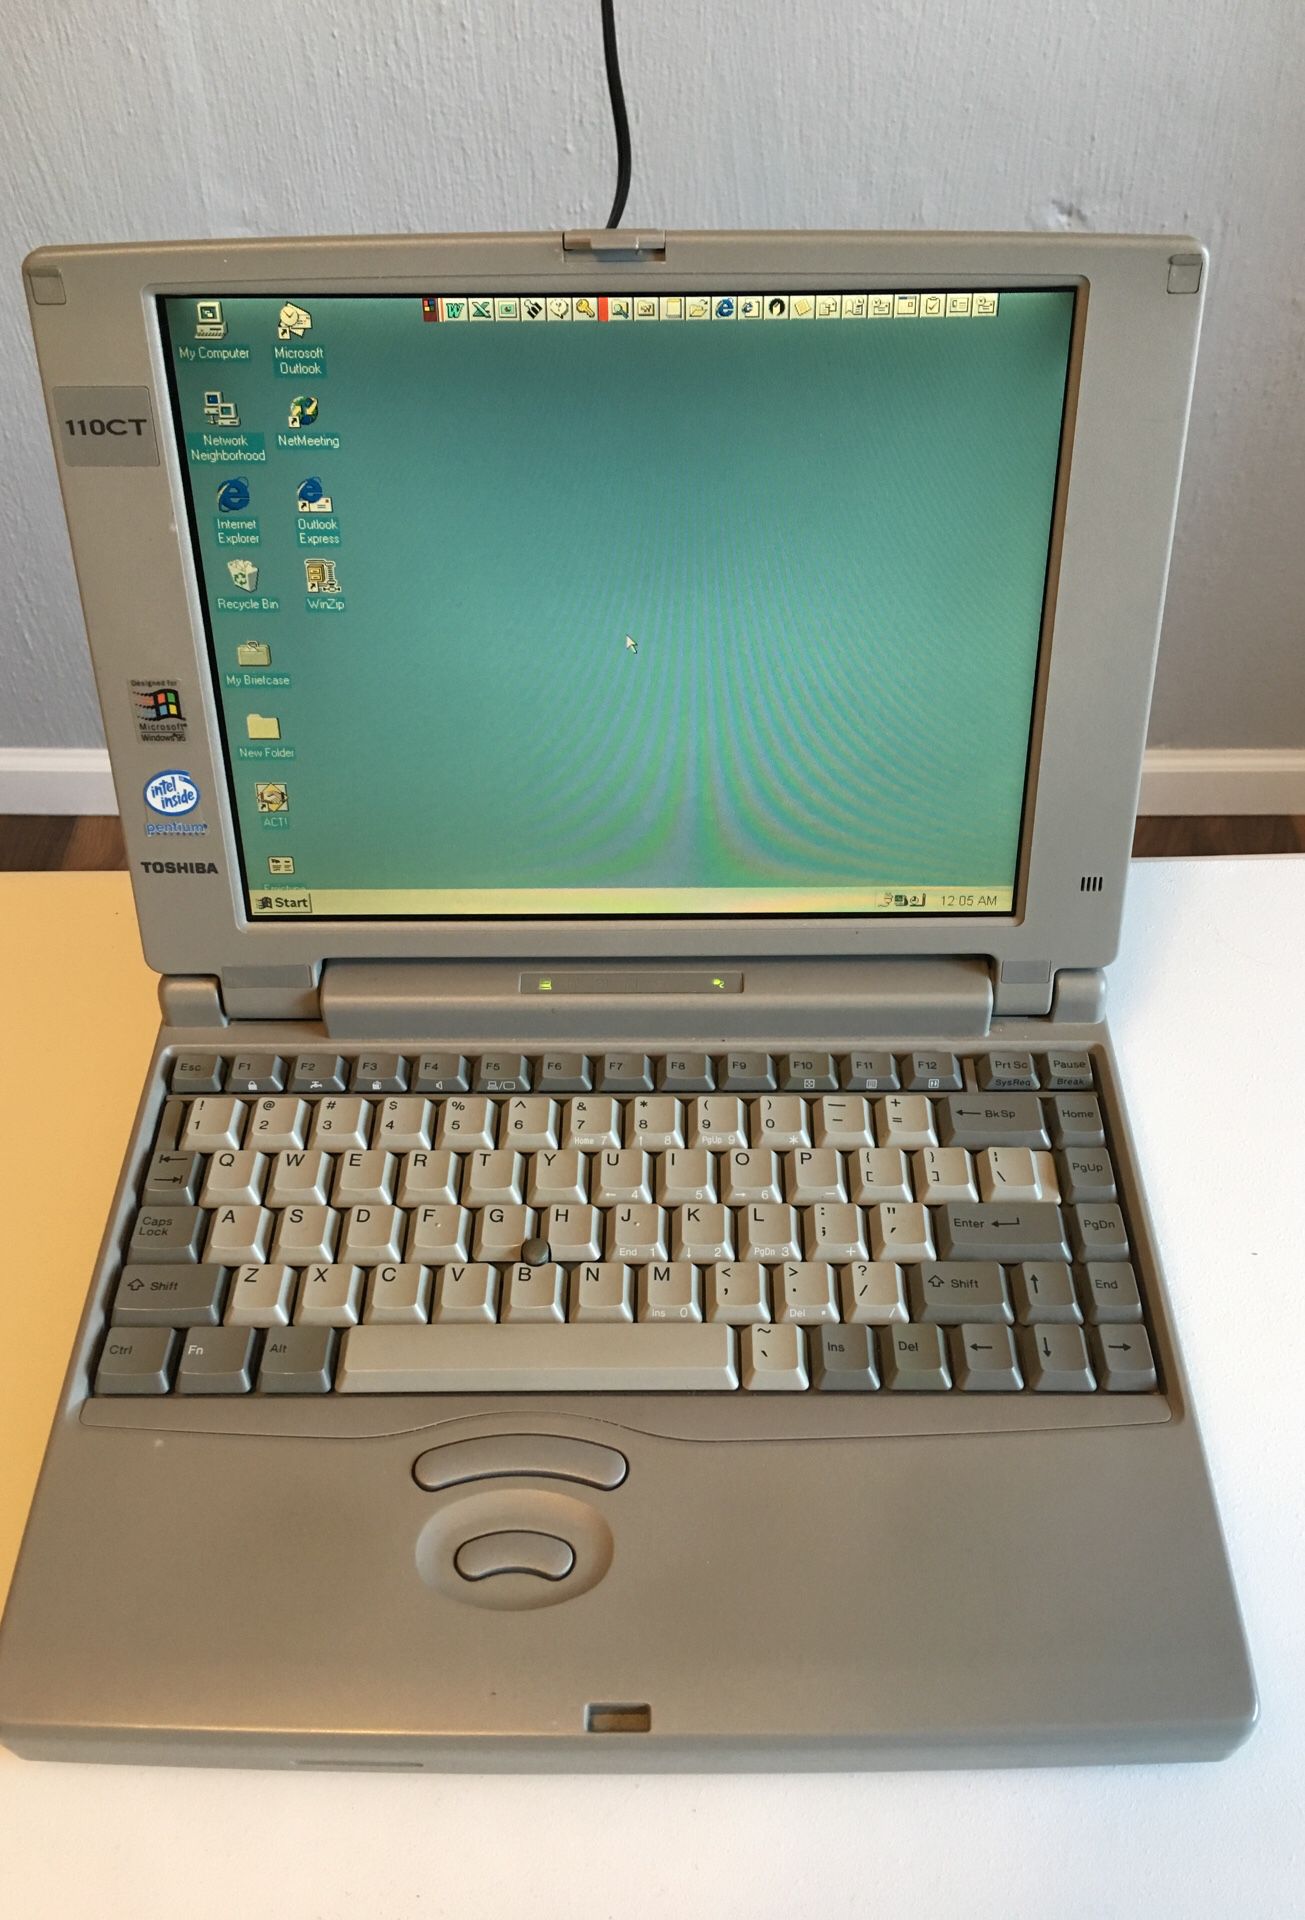 Toshiba Satellite 110CT. Vintage Laptop. Running Smoothly in Win 95’